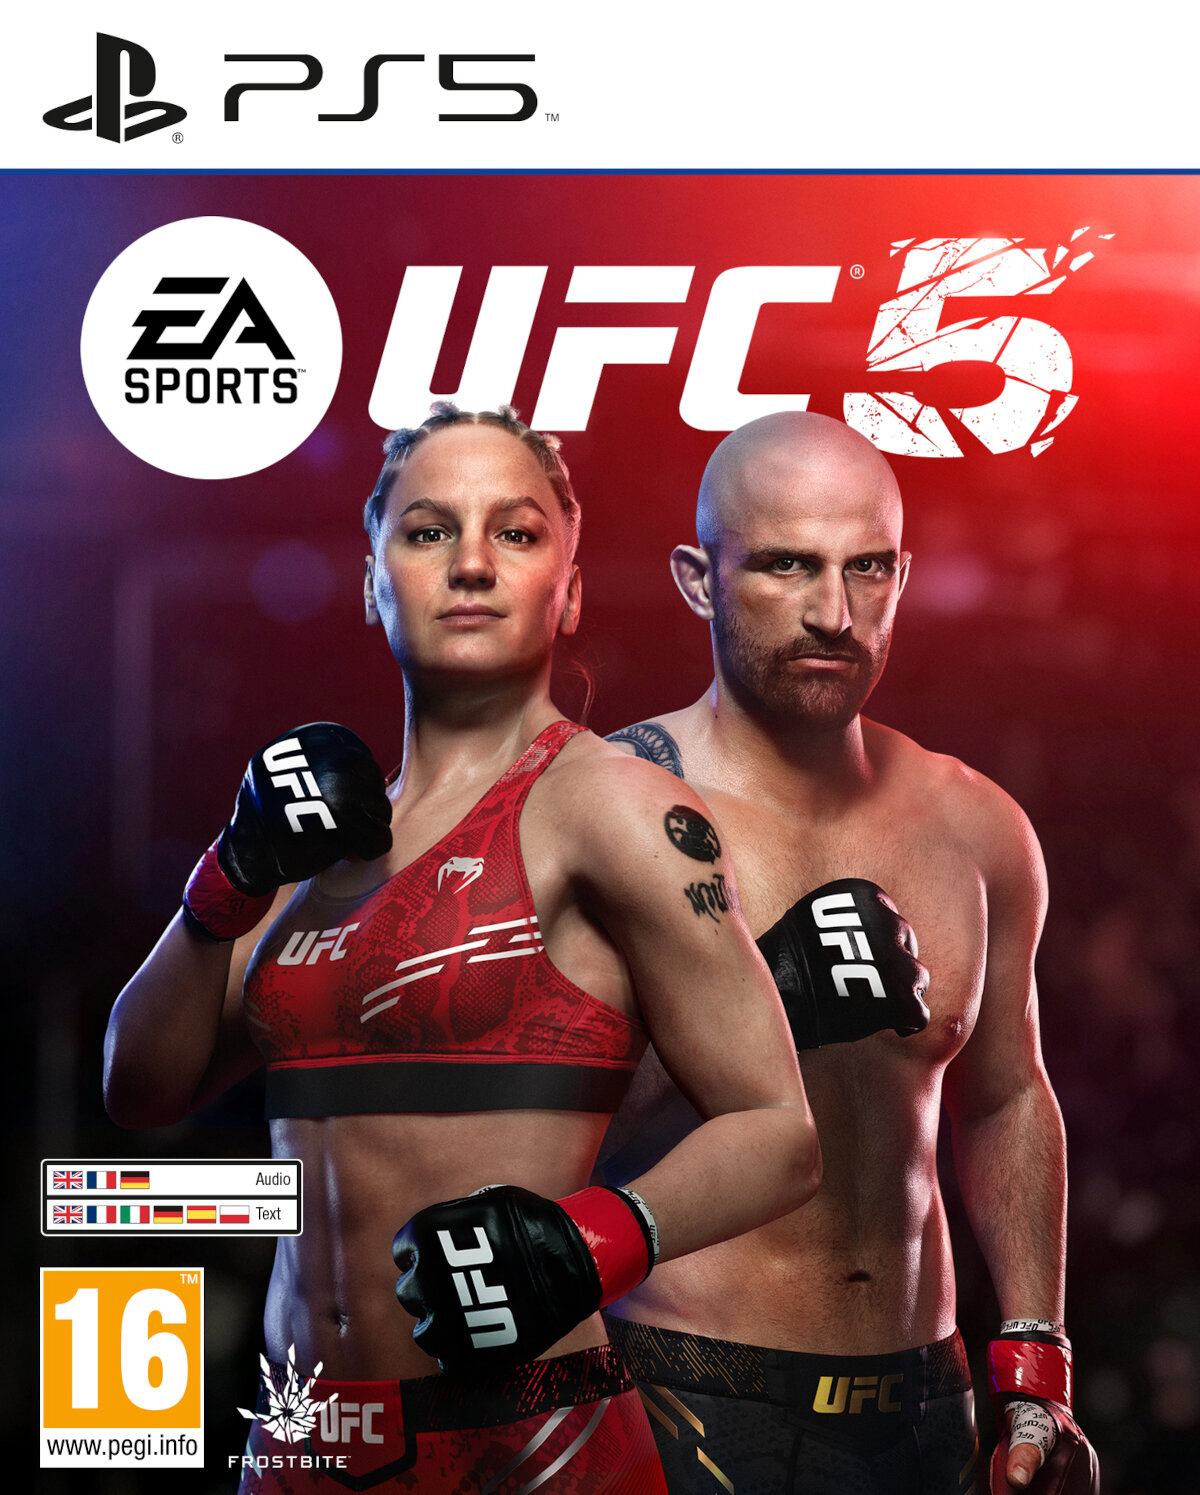 Gra Electronic Arts UFC 5 widok na okładkę od frontu